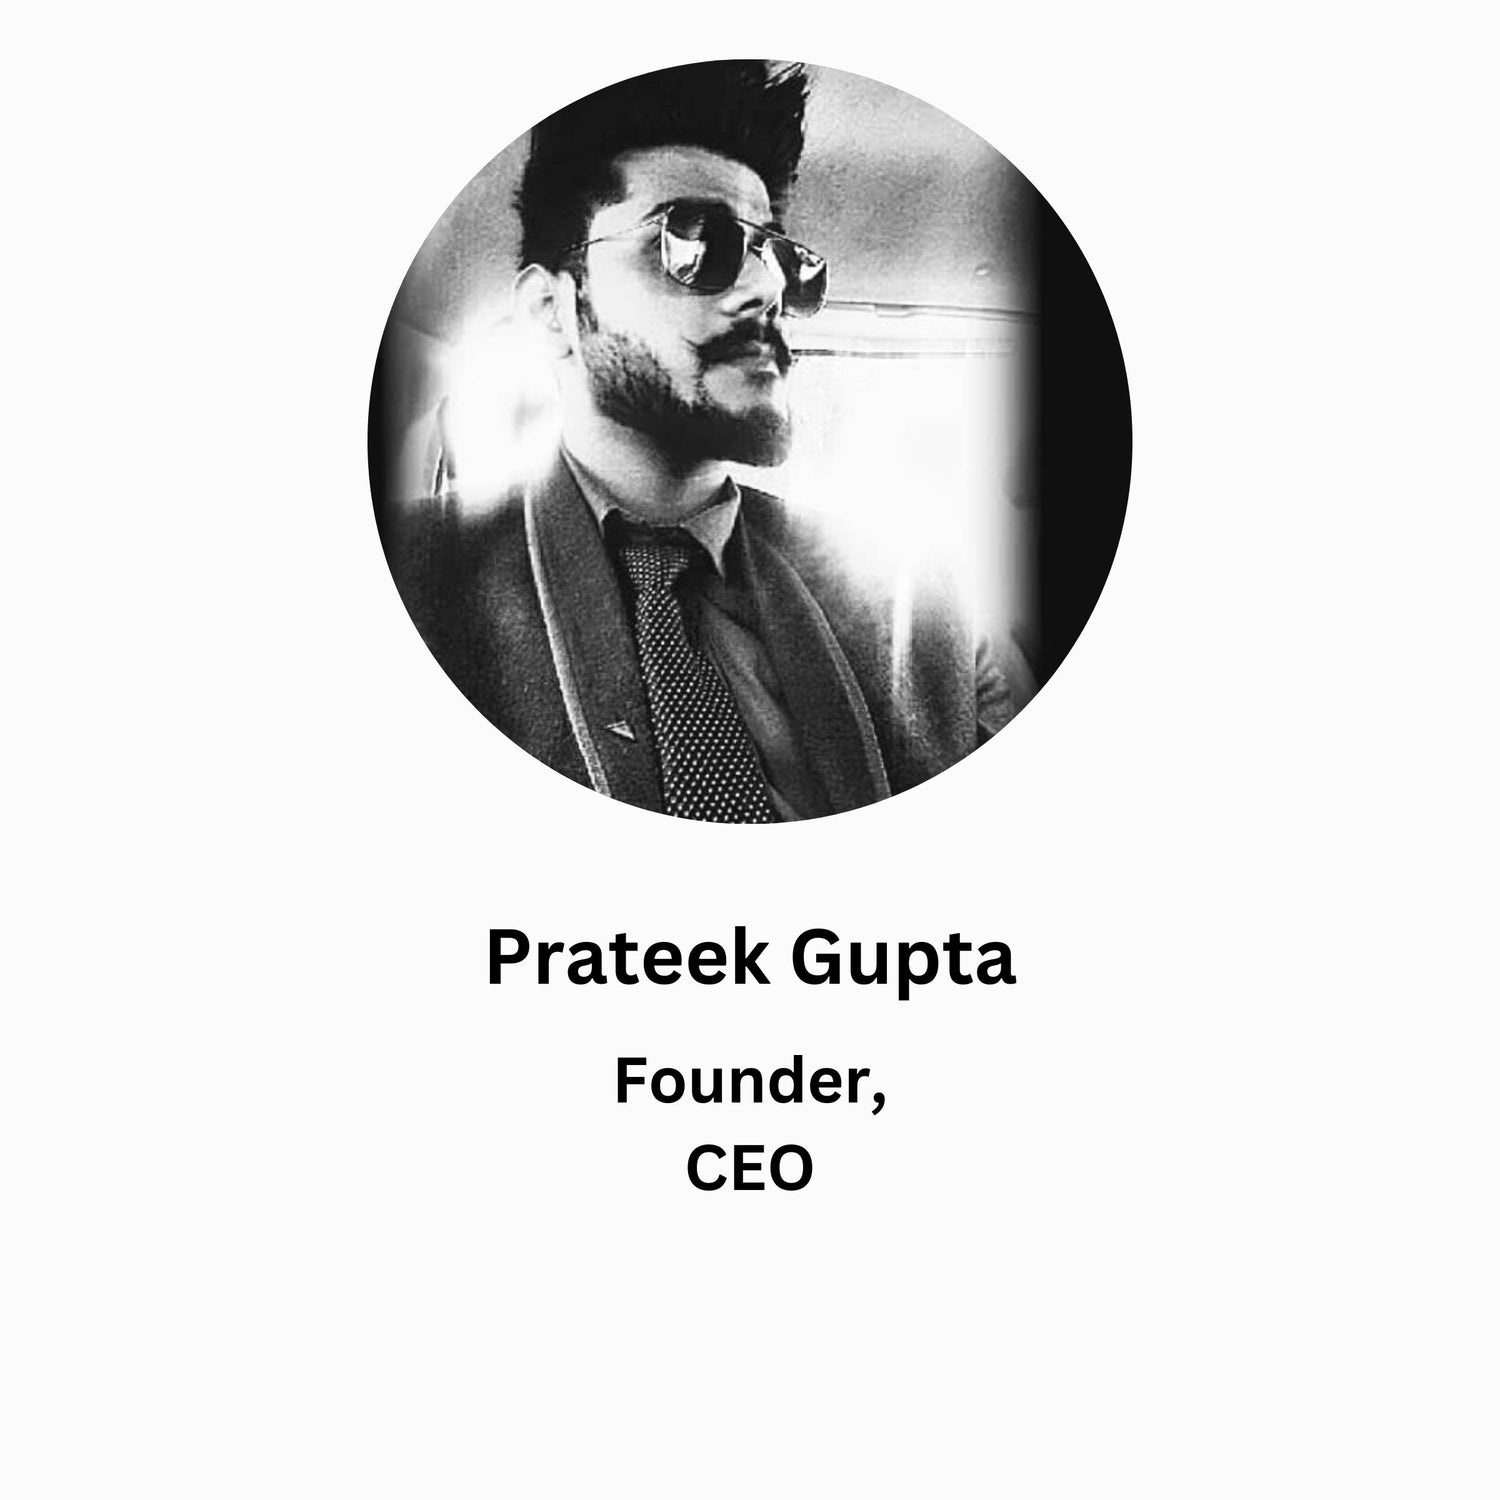 ACES founder Prateek Gupta